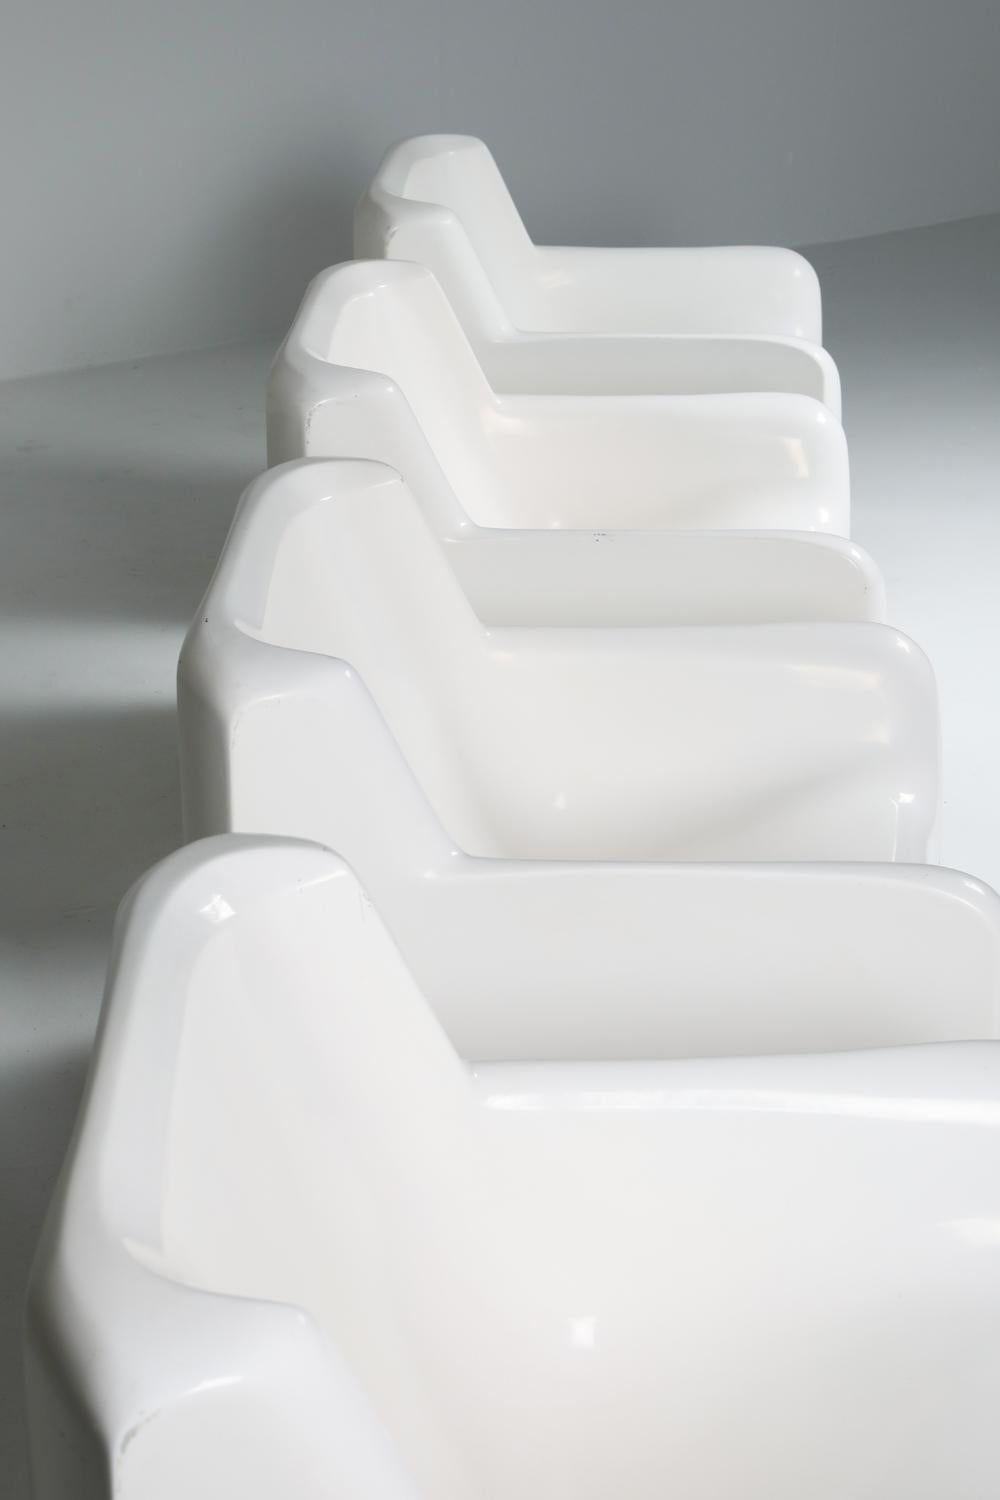 Arflex 'Solar' Lounge Chairs in Fiberglass by Carlo Bartali For Sale 2